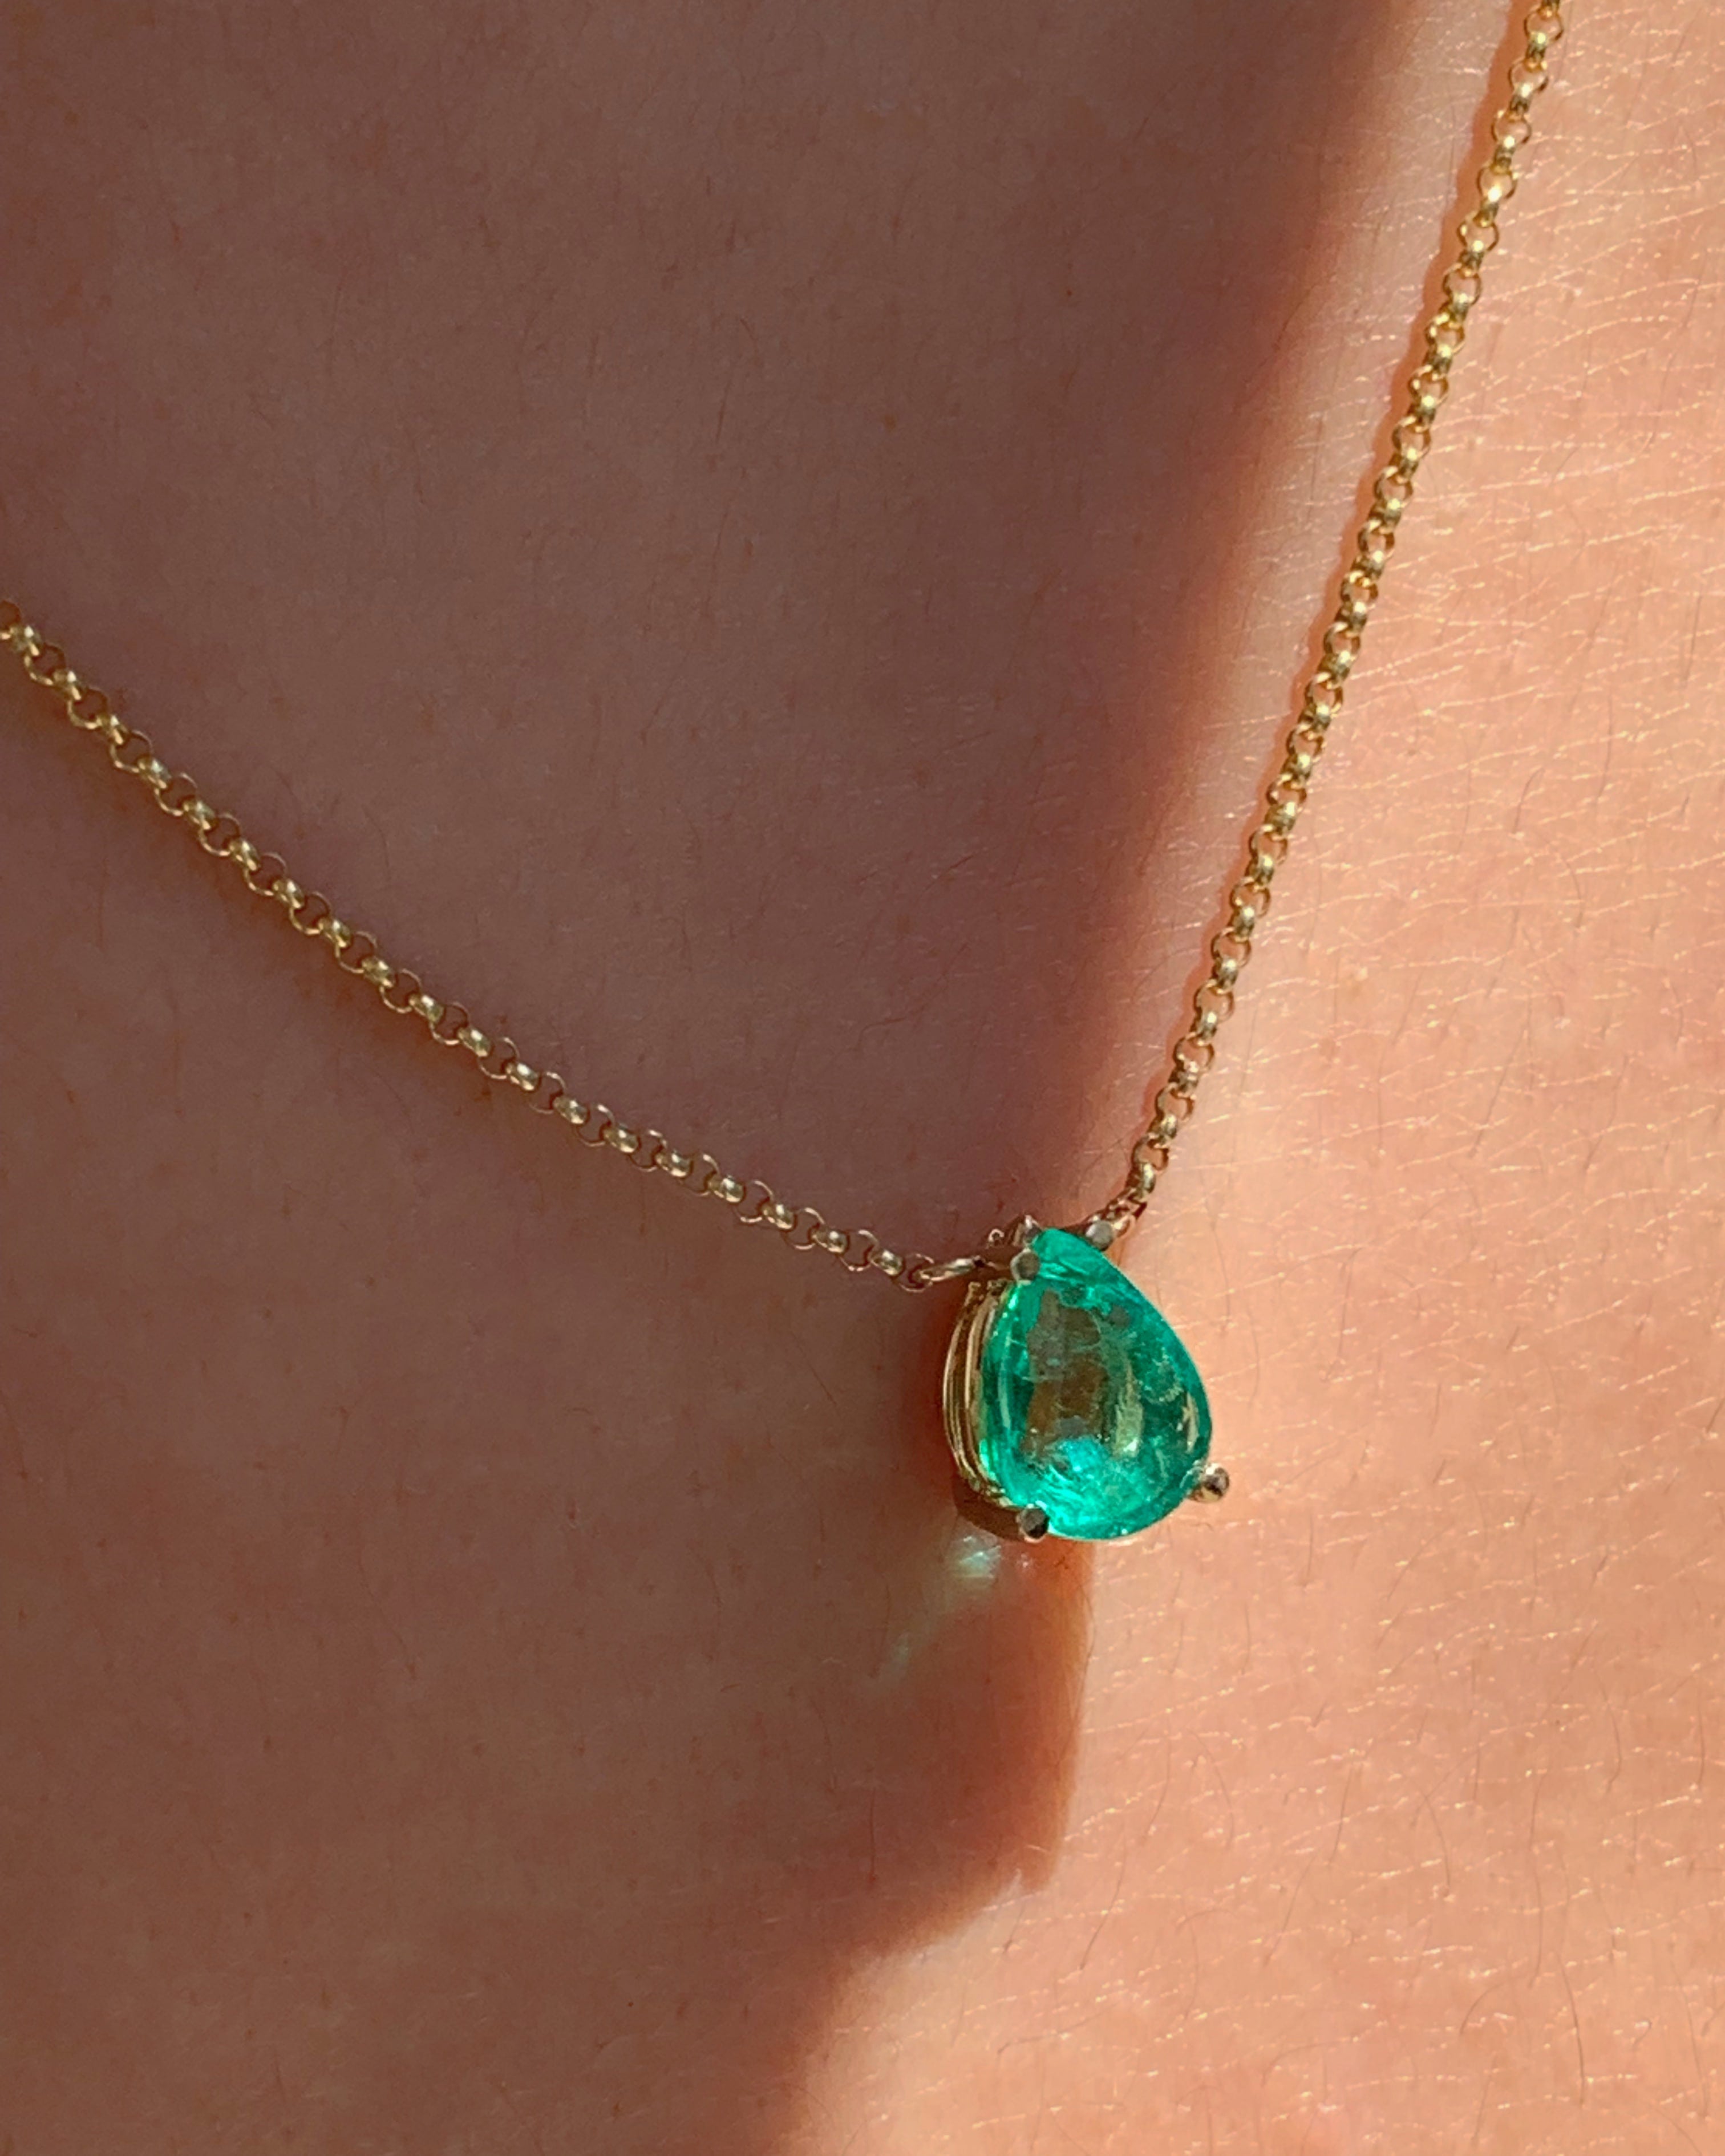 Teardrop/Pear Emerald Solitaire Necklace